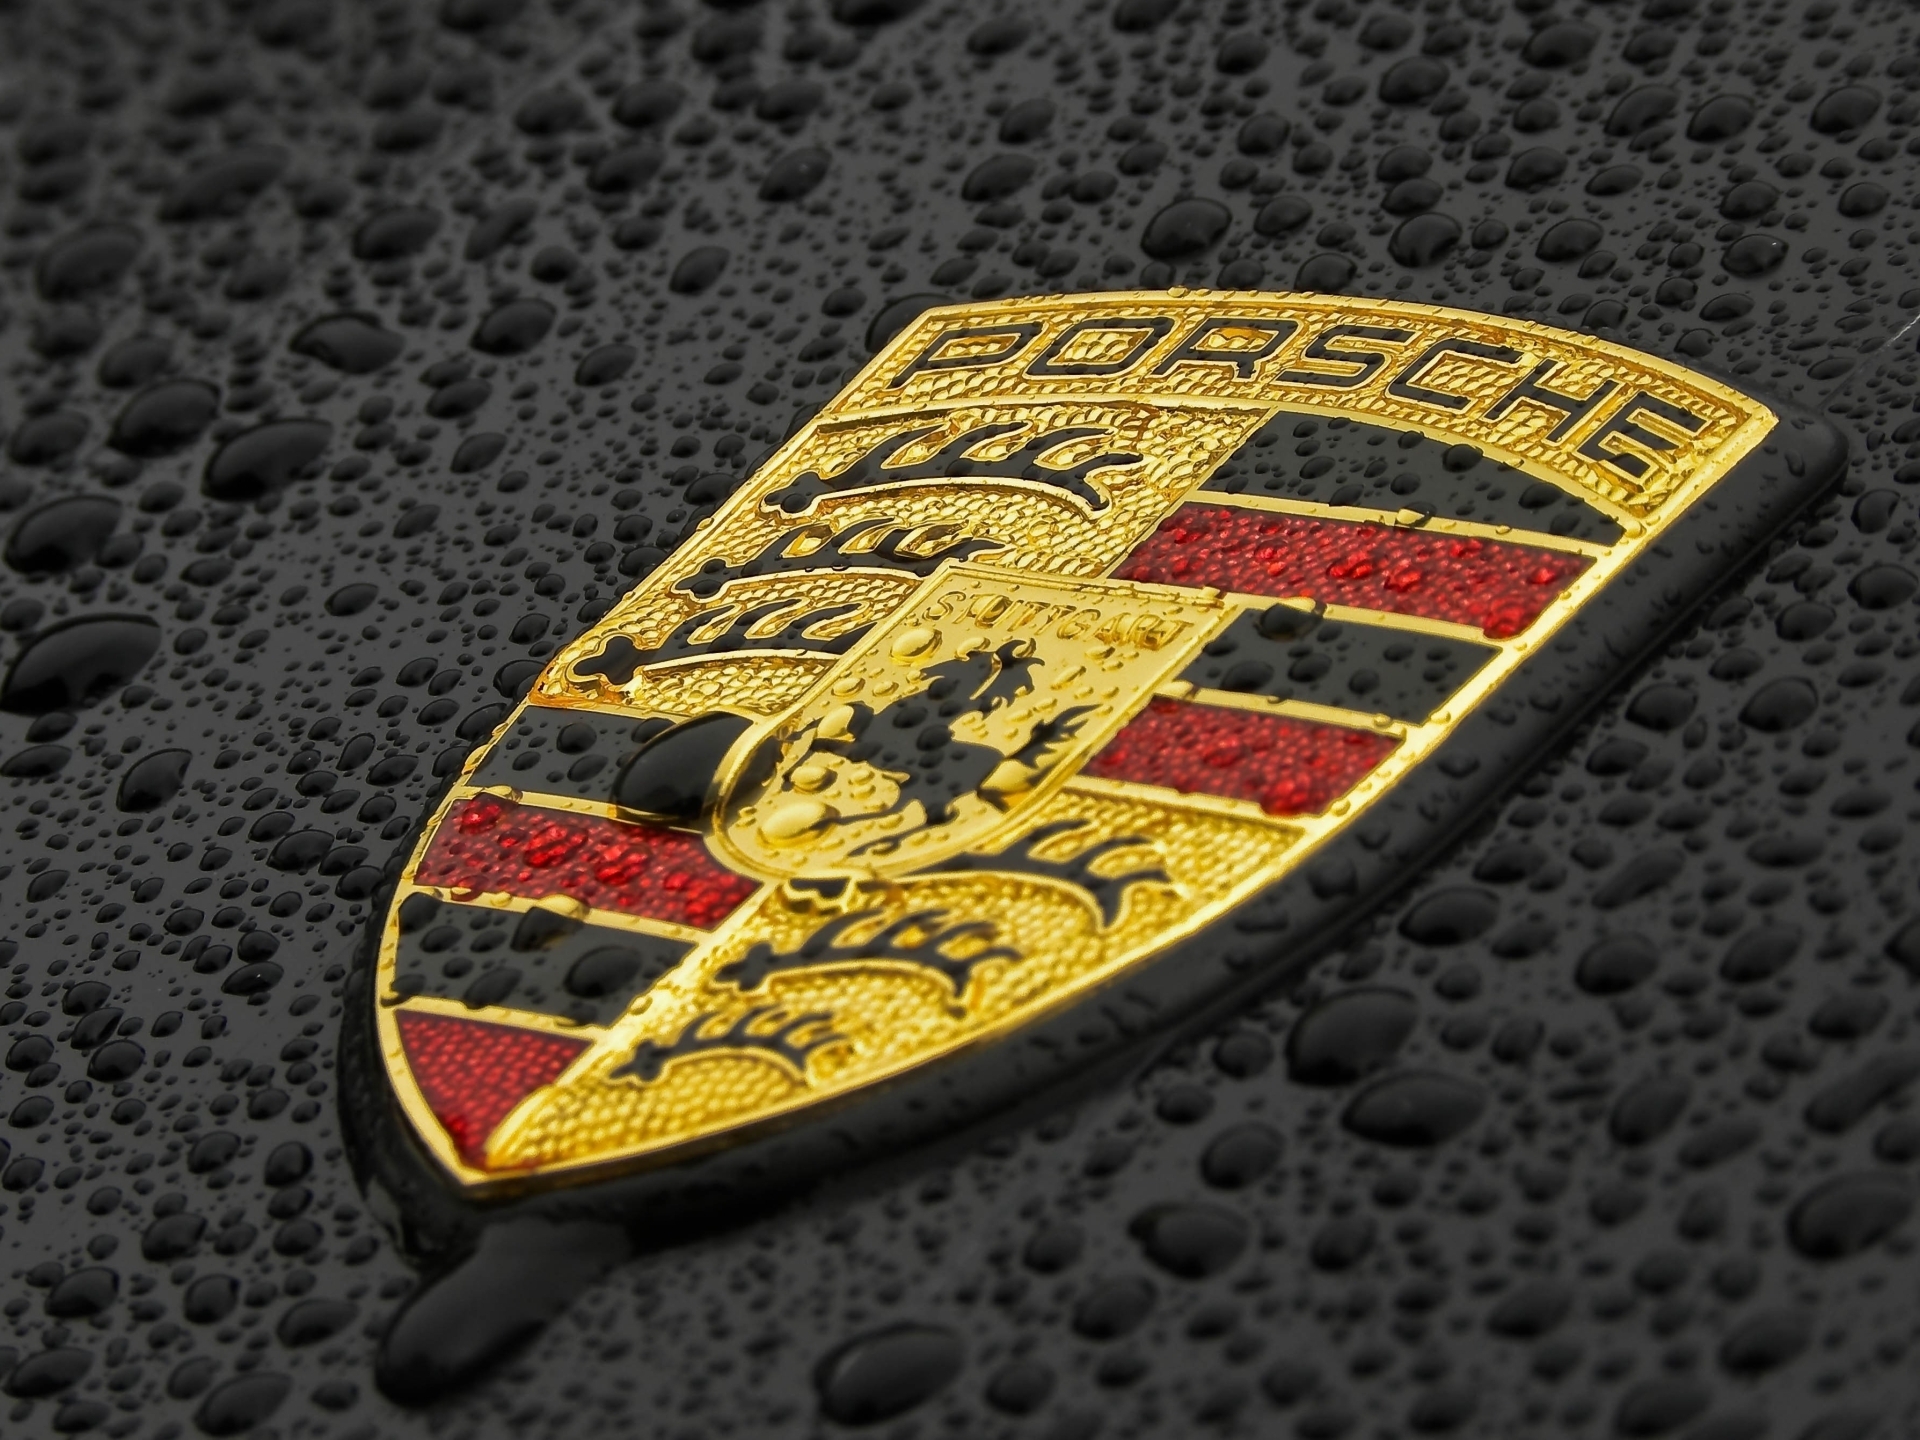 Porsche Wallpaper Widescreen - image